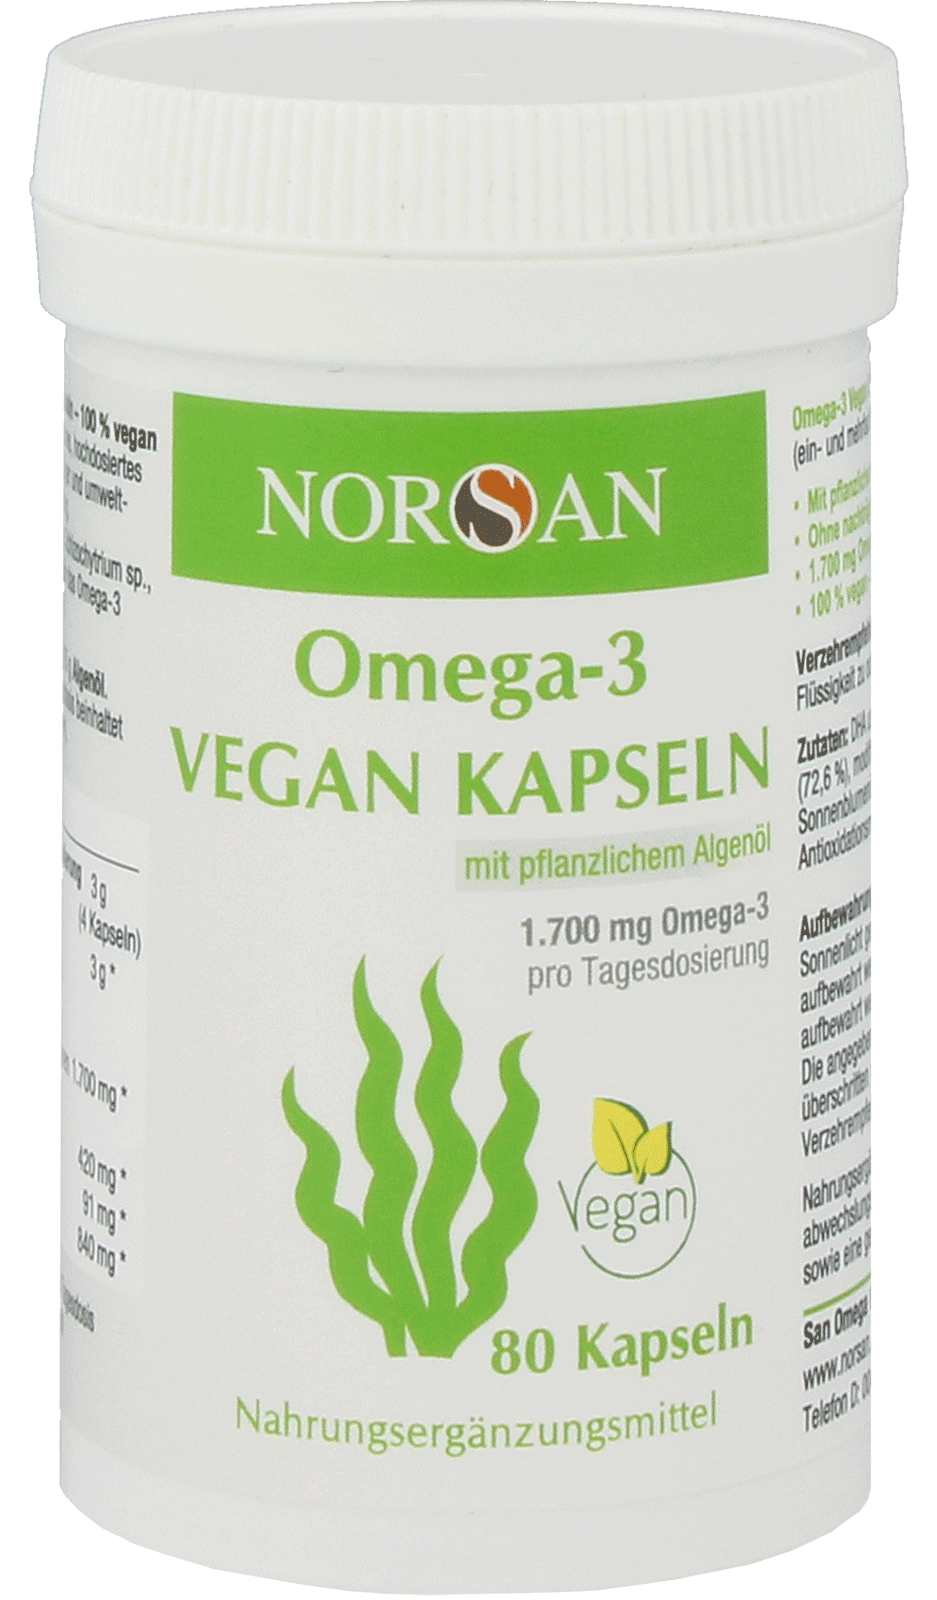 NORSAN Omega-3 Vegan Kapseln 